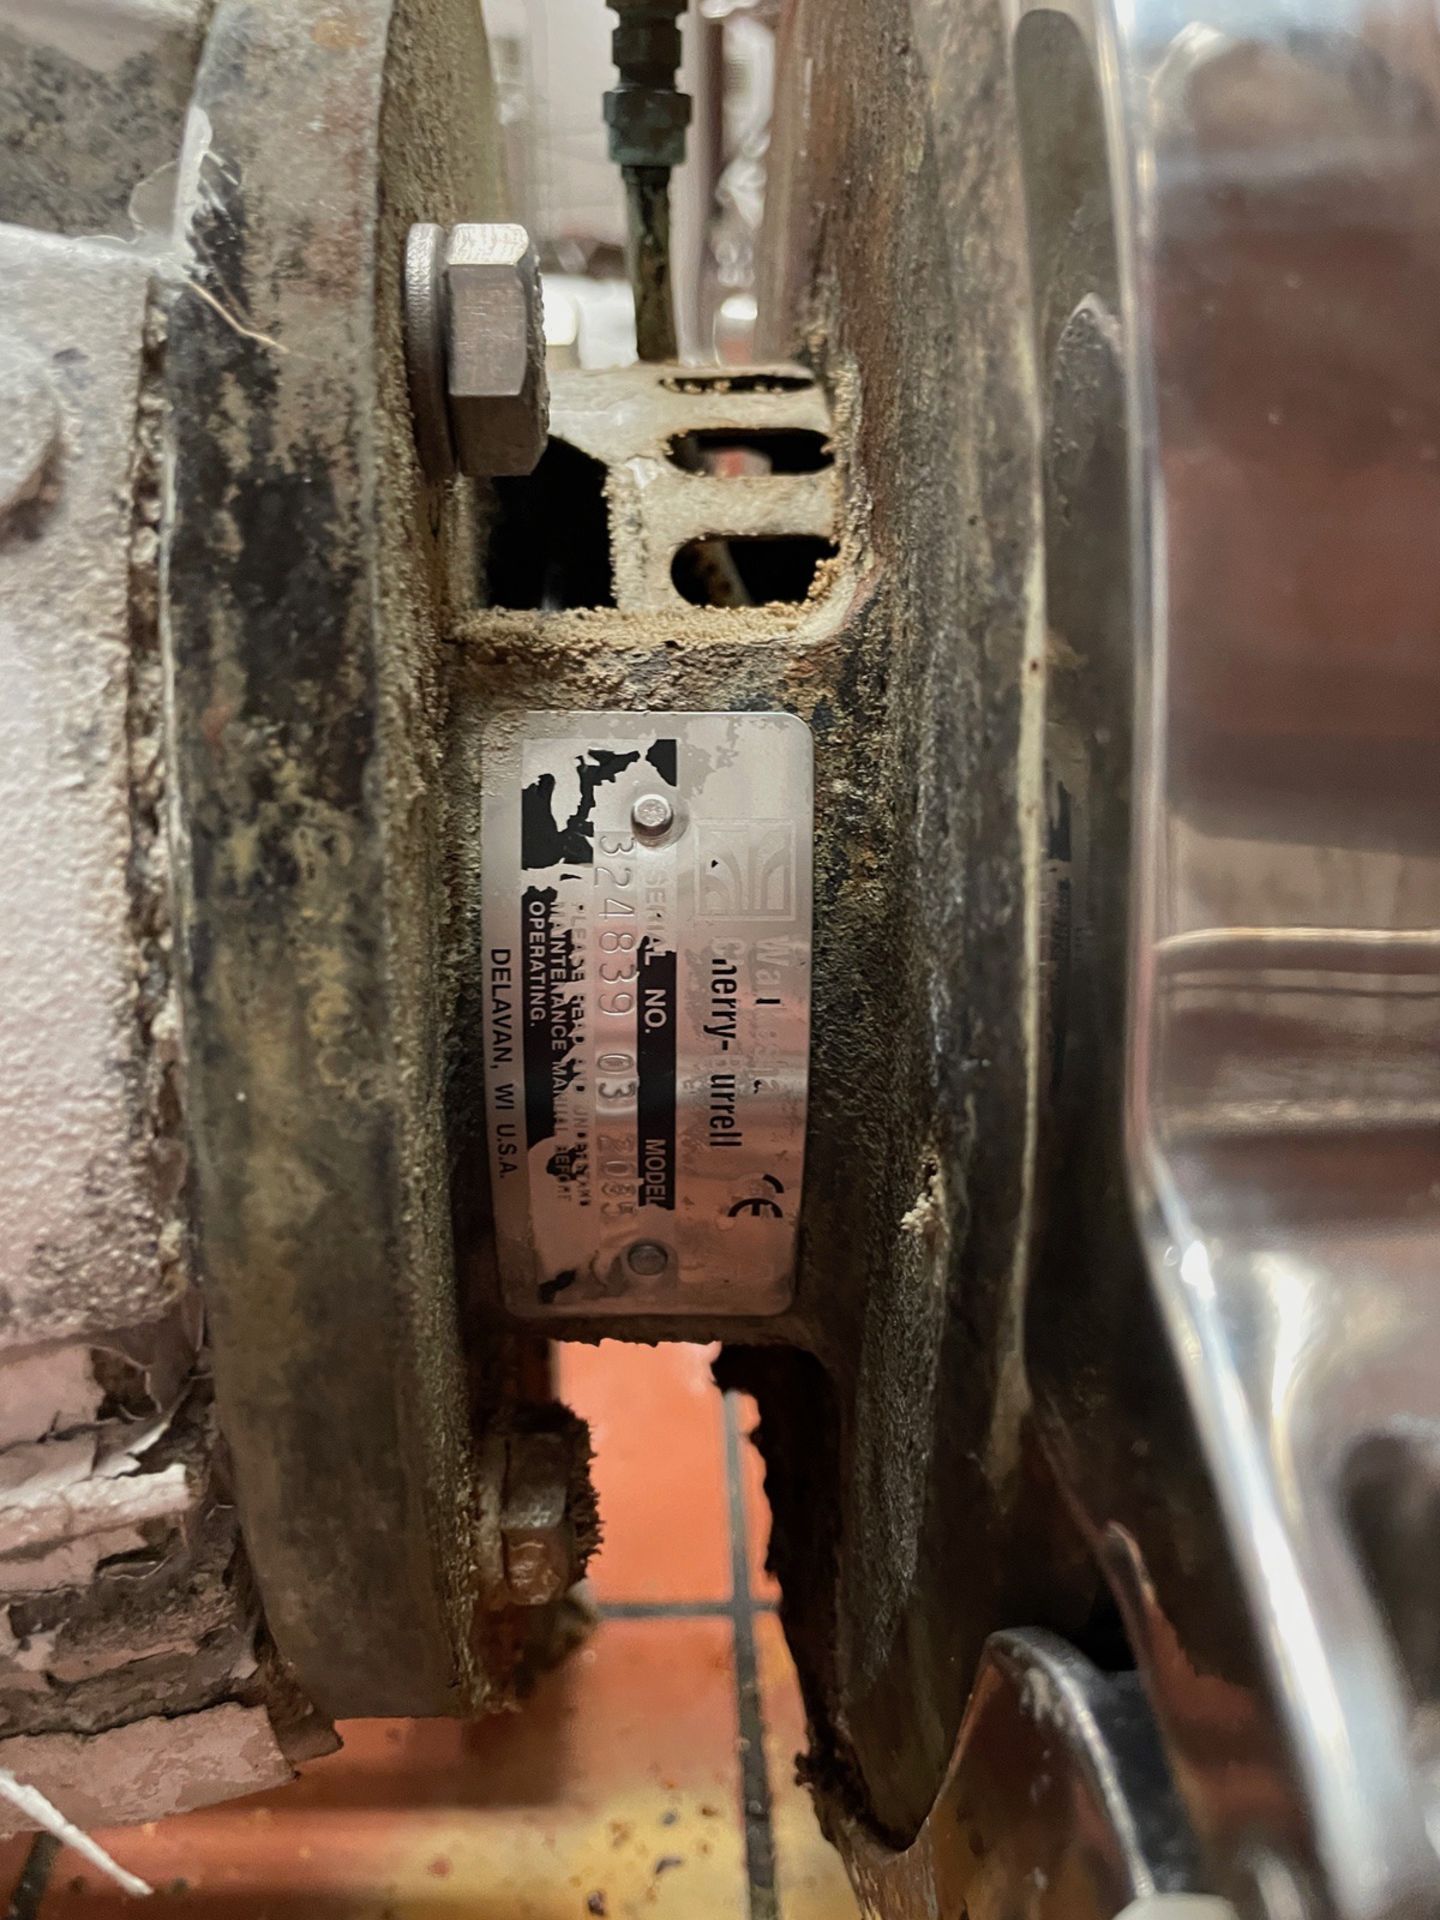 Waukesha Cherry Burrell Centrifugal Pump, 7.5 HP, Model 2085, S/N: 324839-03 | Rig Fee: $150 - Image 4 of 4